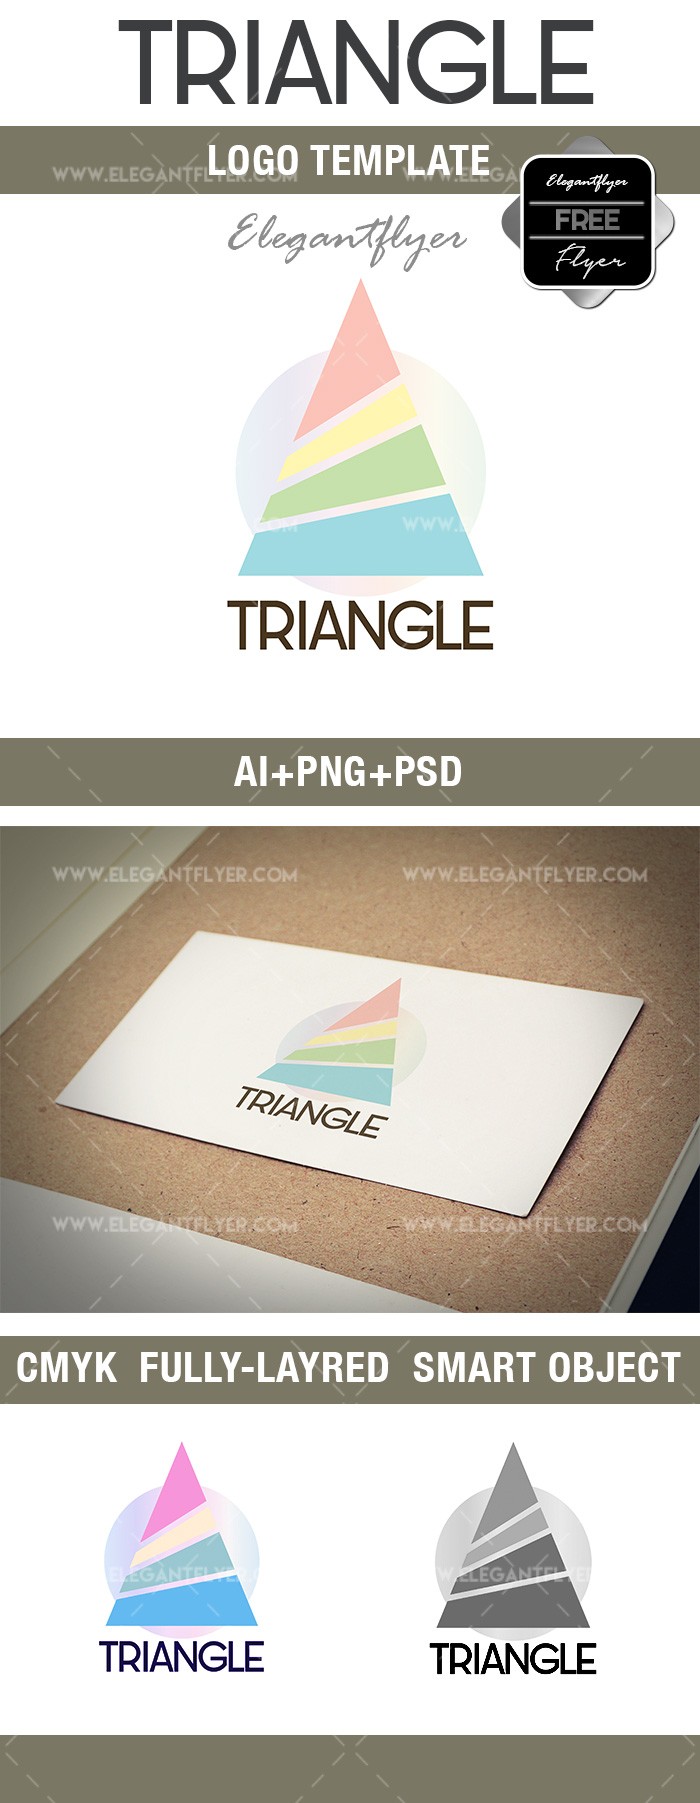 Triangolo by ElegantFlyer